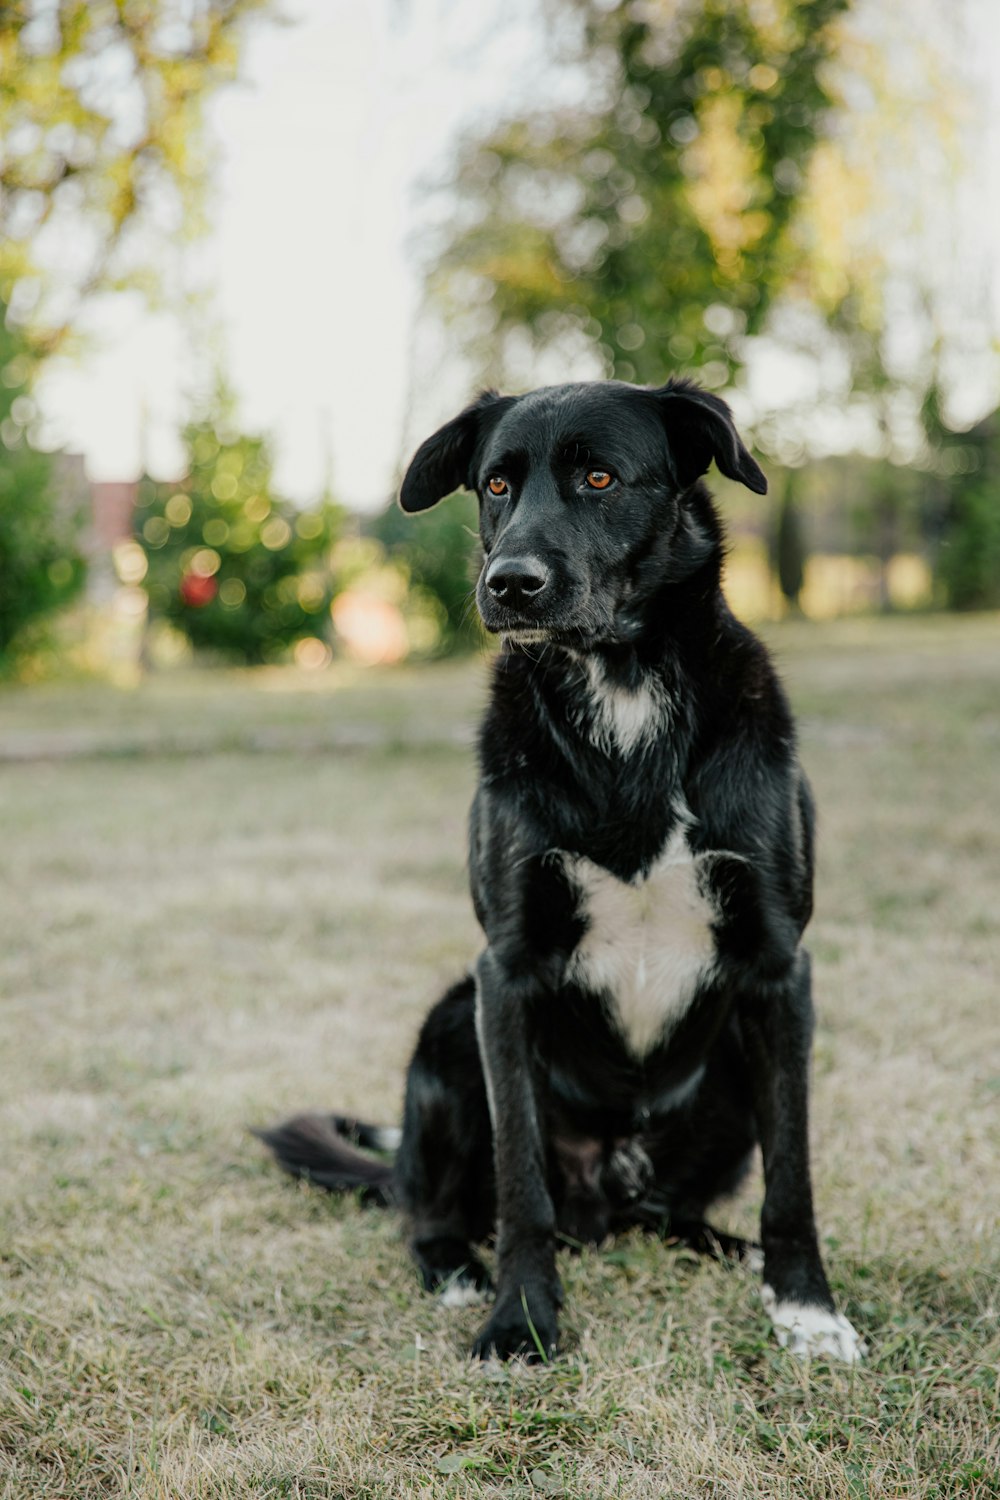 black and white short coat medium dog sitting on green grass field during daytime